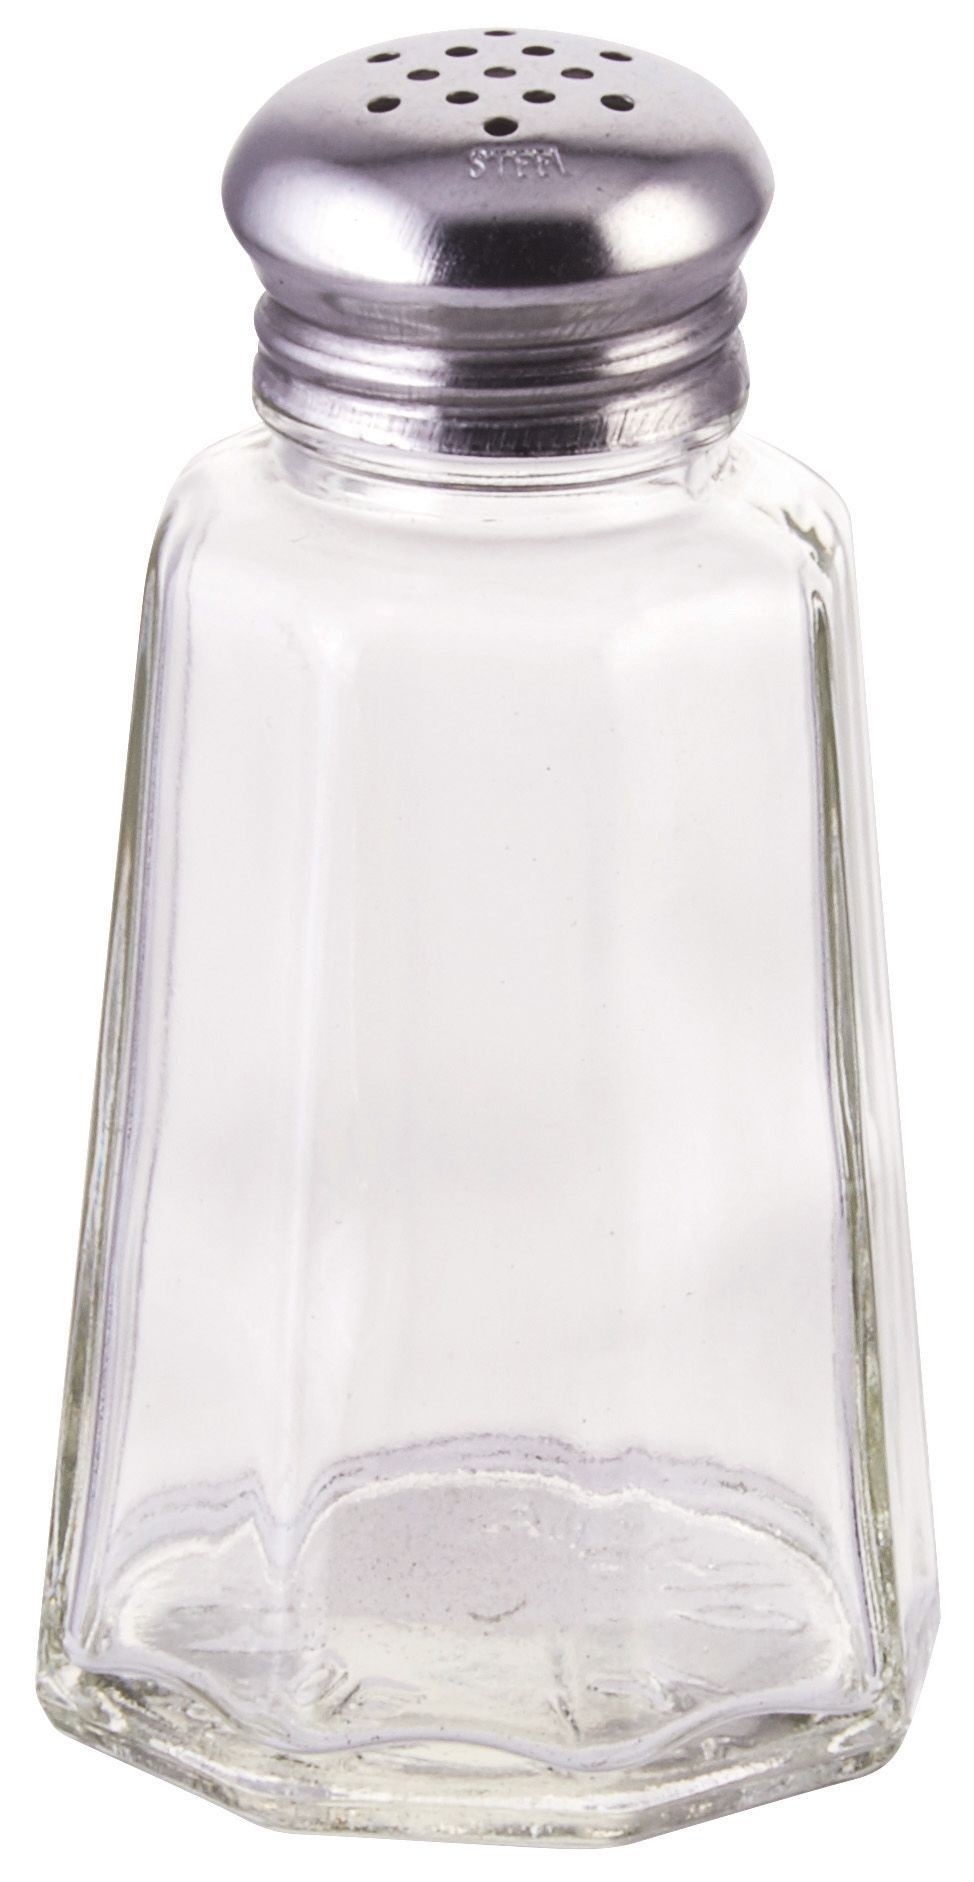 Winco G-106 Paneled 2 oz. Glass Salt Shaker with Mushroom Top